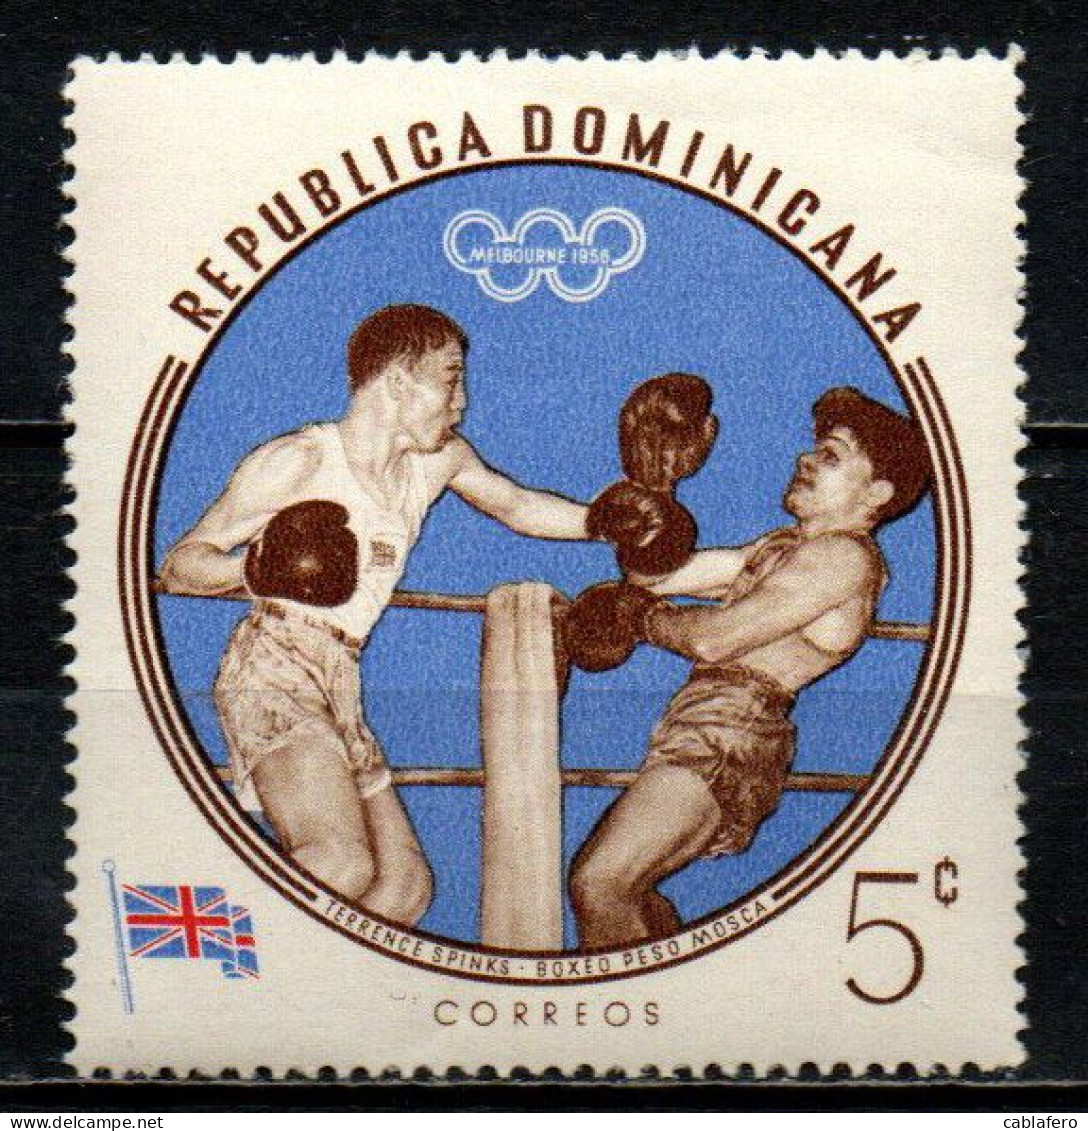 REPUBBLICA DOMENICANA - 1960 - TERRENCE SPINKS - OLIMPIADI DI MELBOURNE -MNH - Dominicaanse Republiek